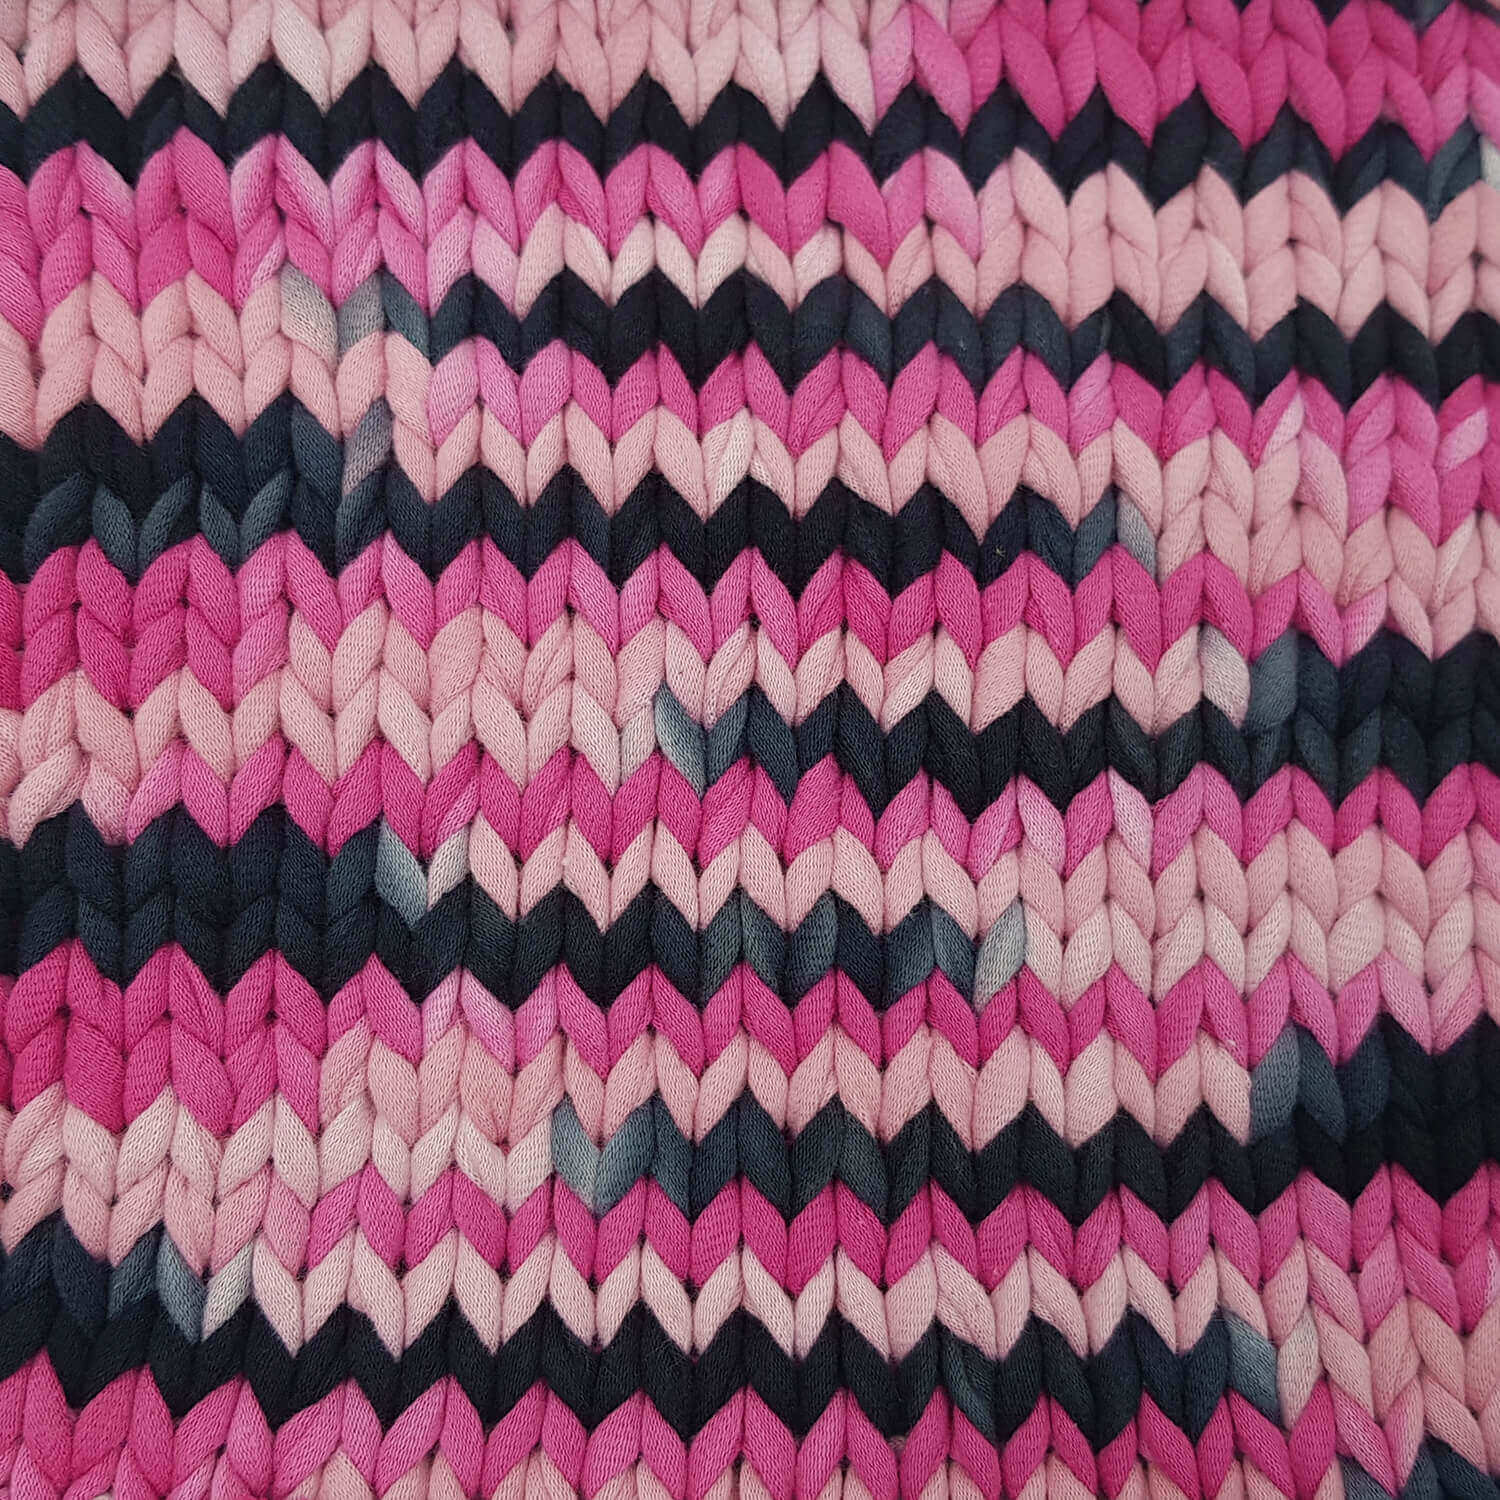 T-Shirt Yarn by Kotton - Multi Color M09